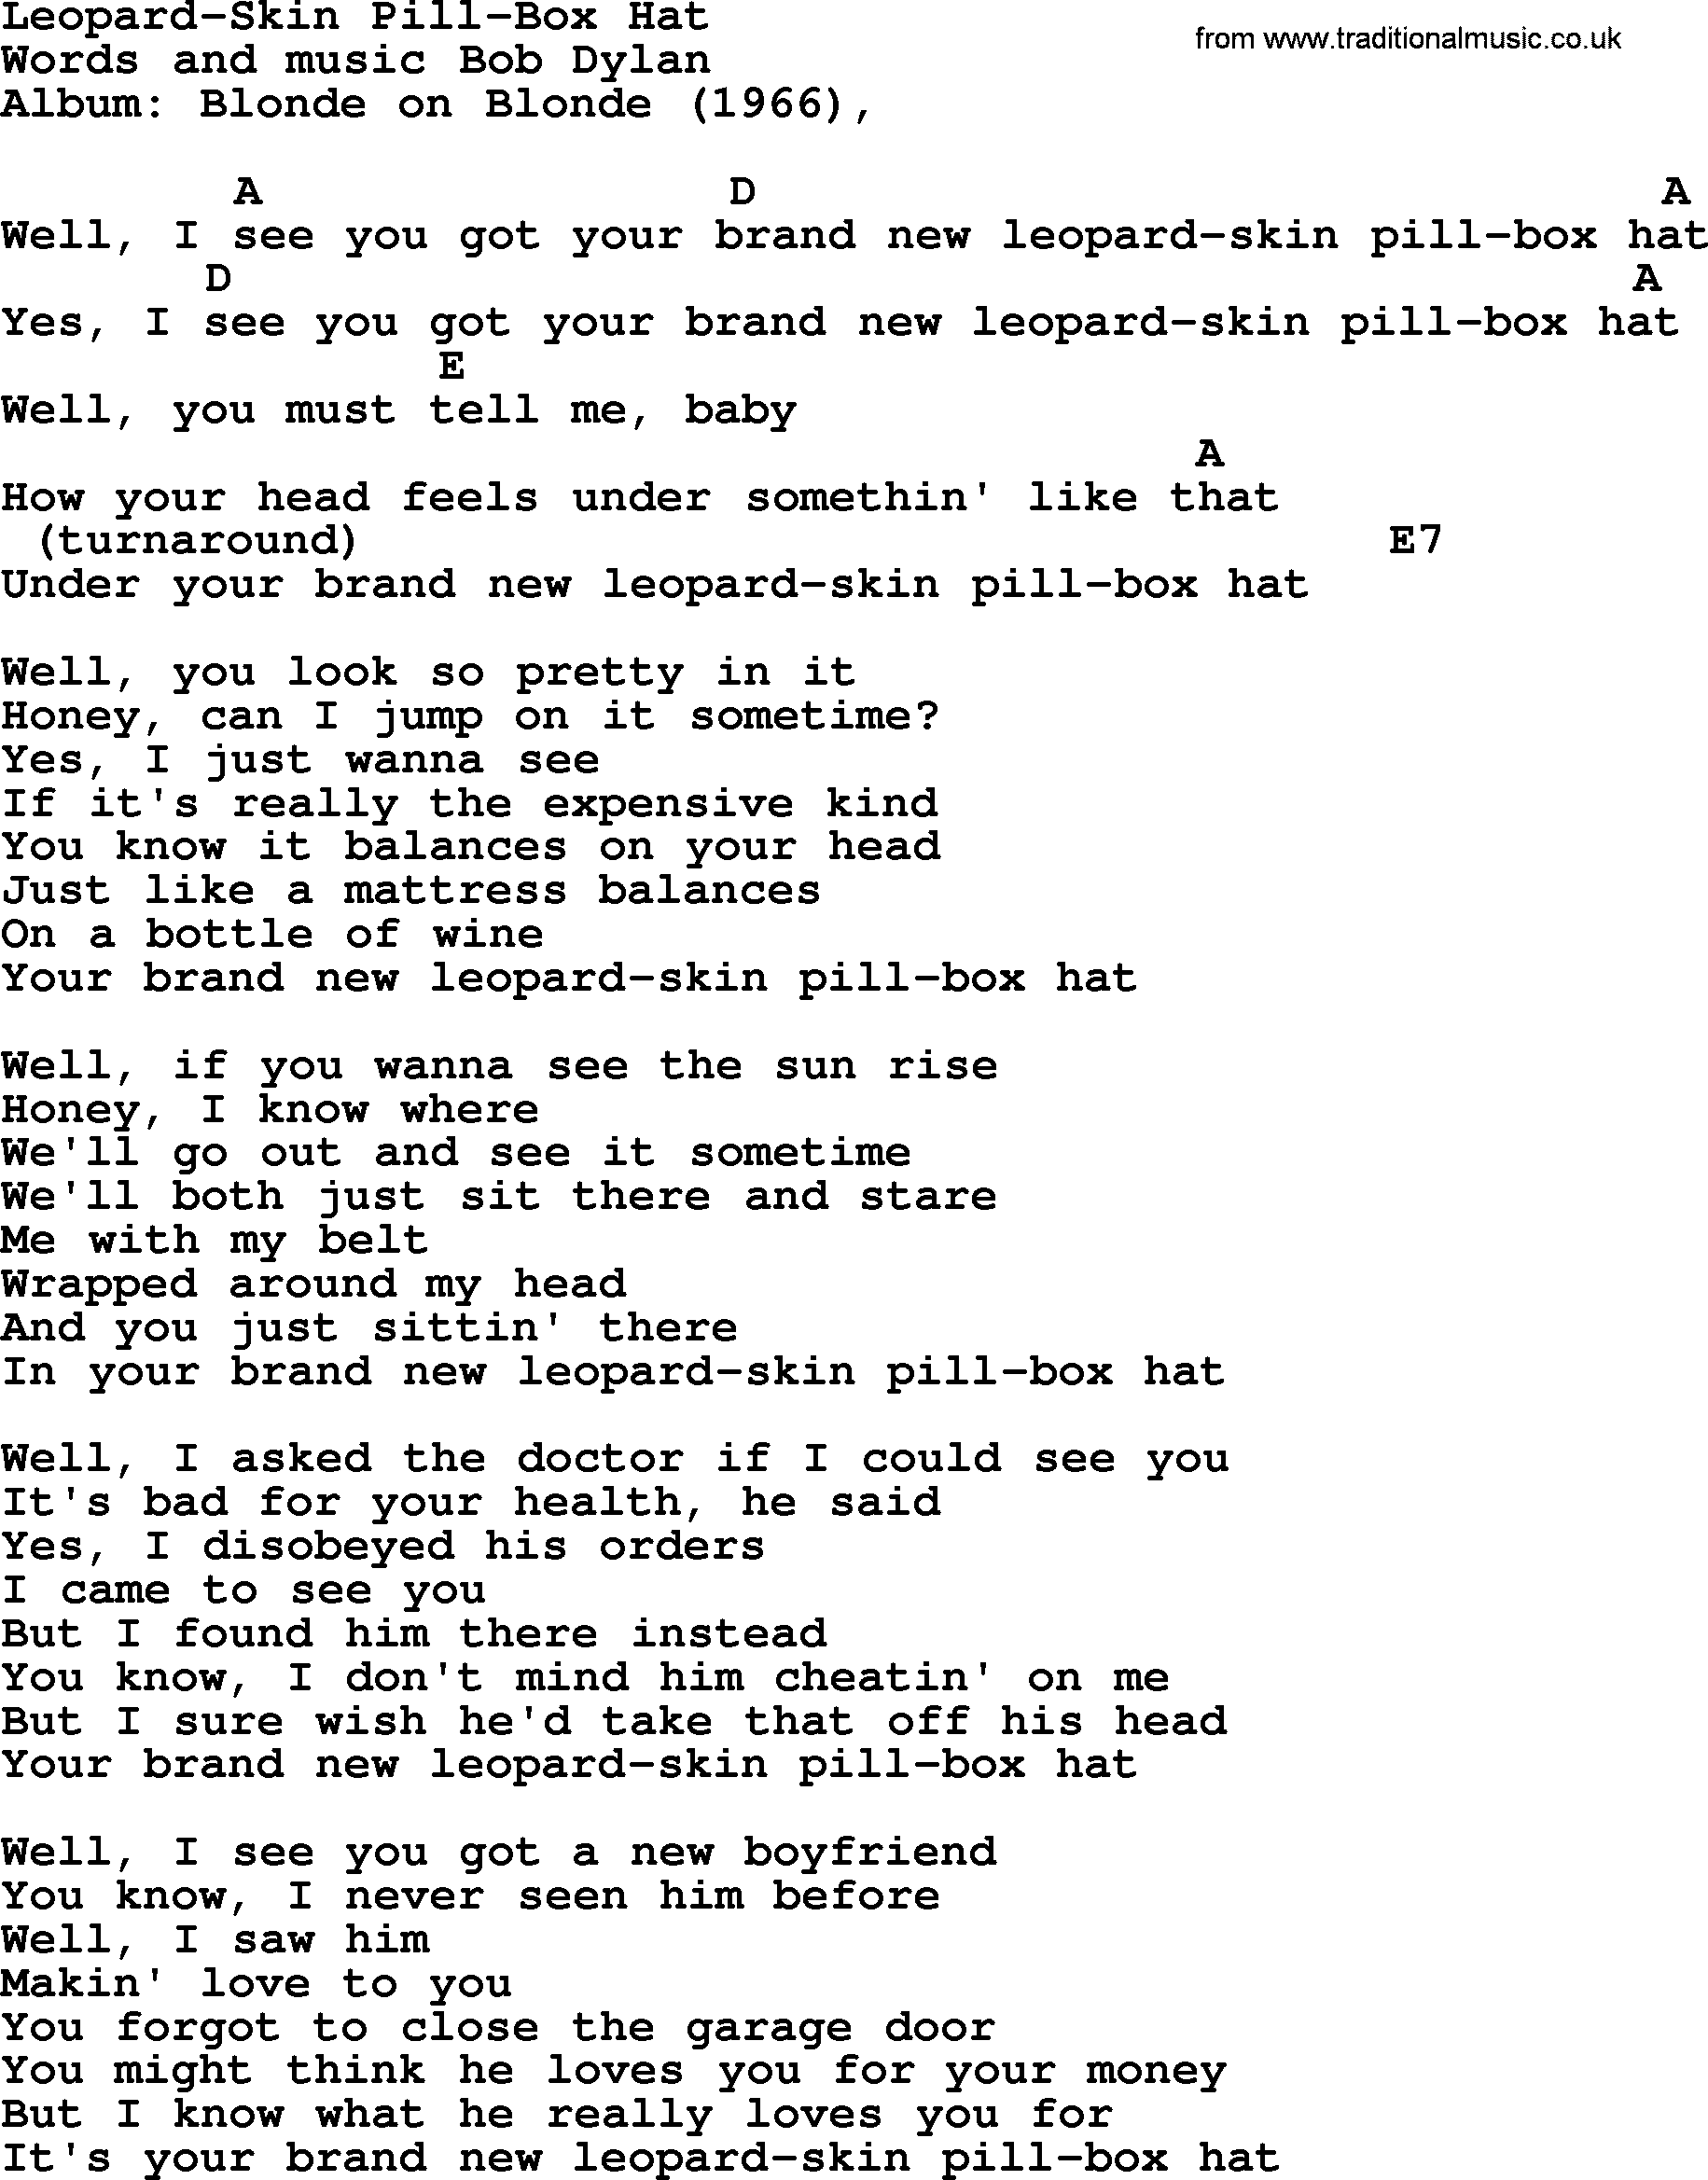 Bob Dylan song, lyrics with chords - Leopard-Skin Pill-Box Hat